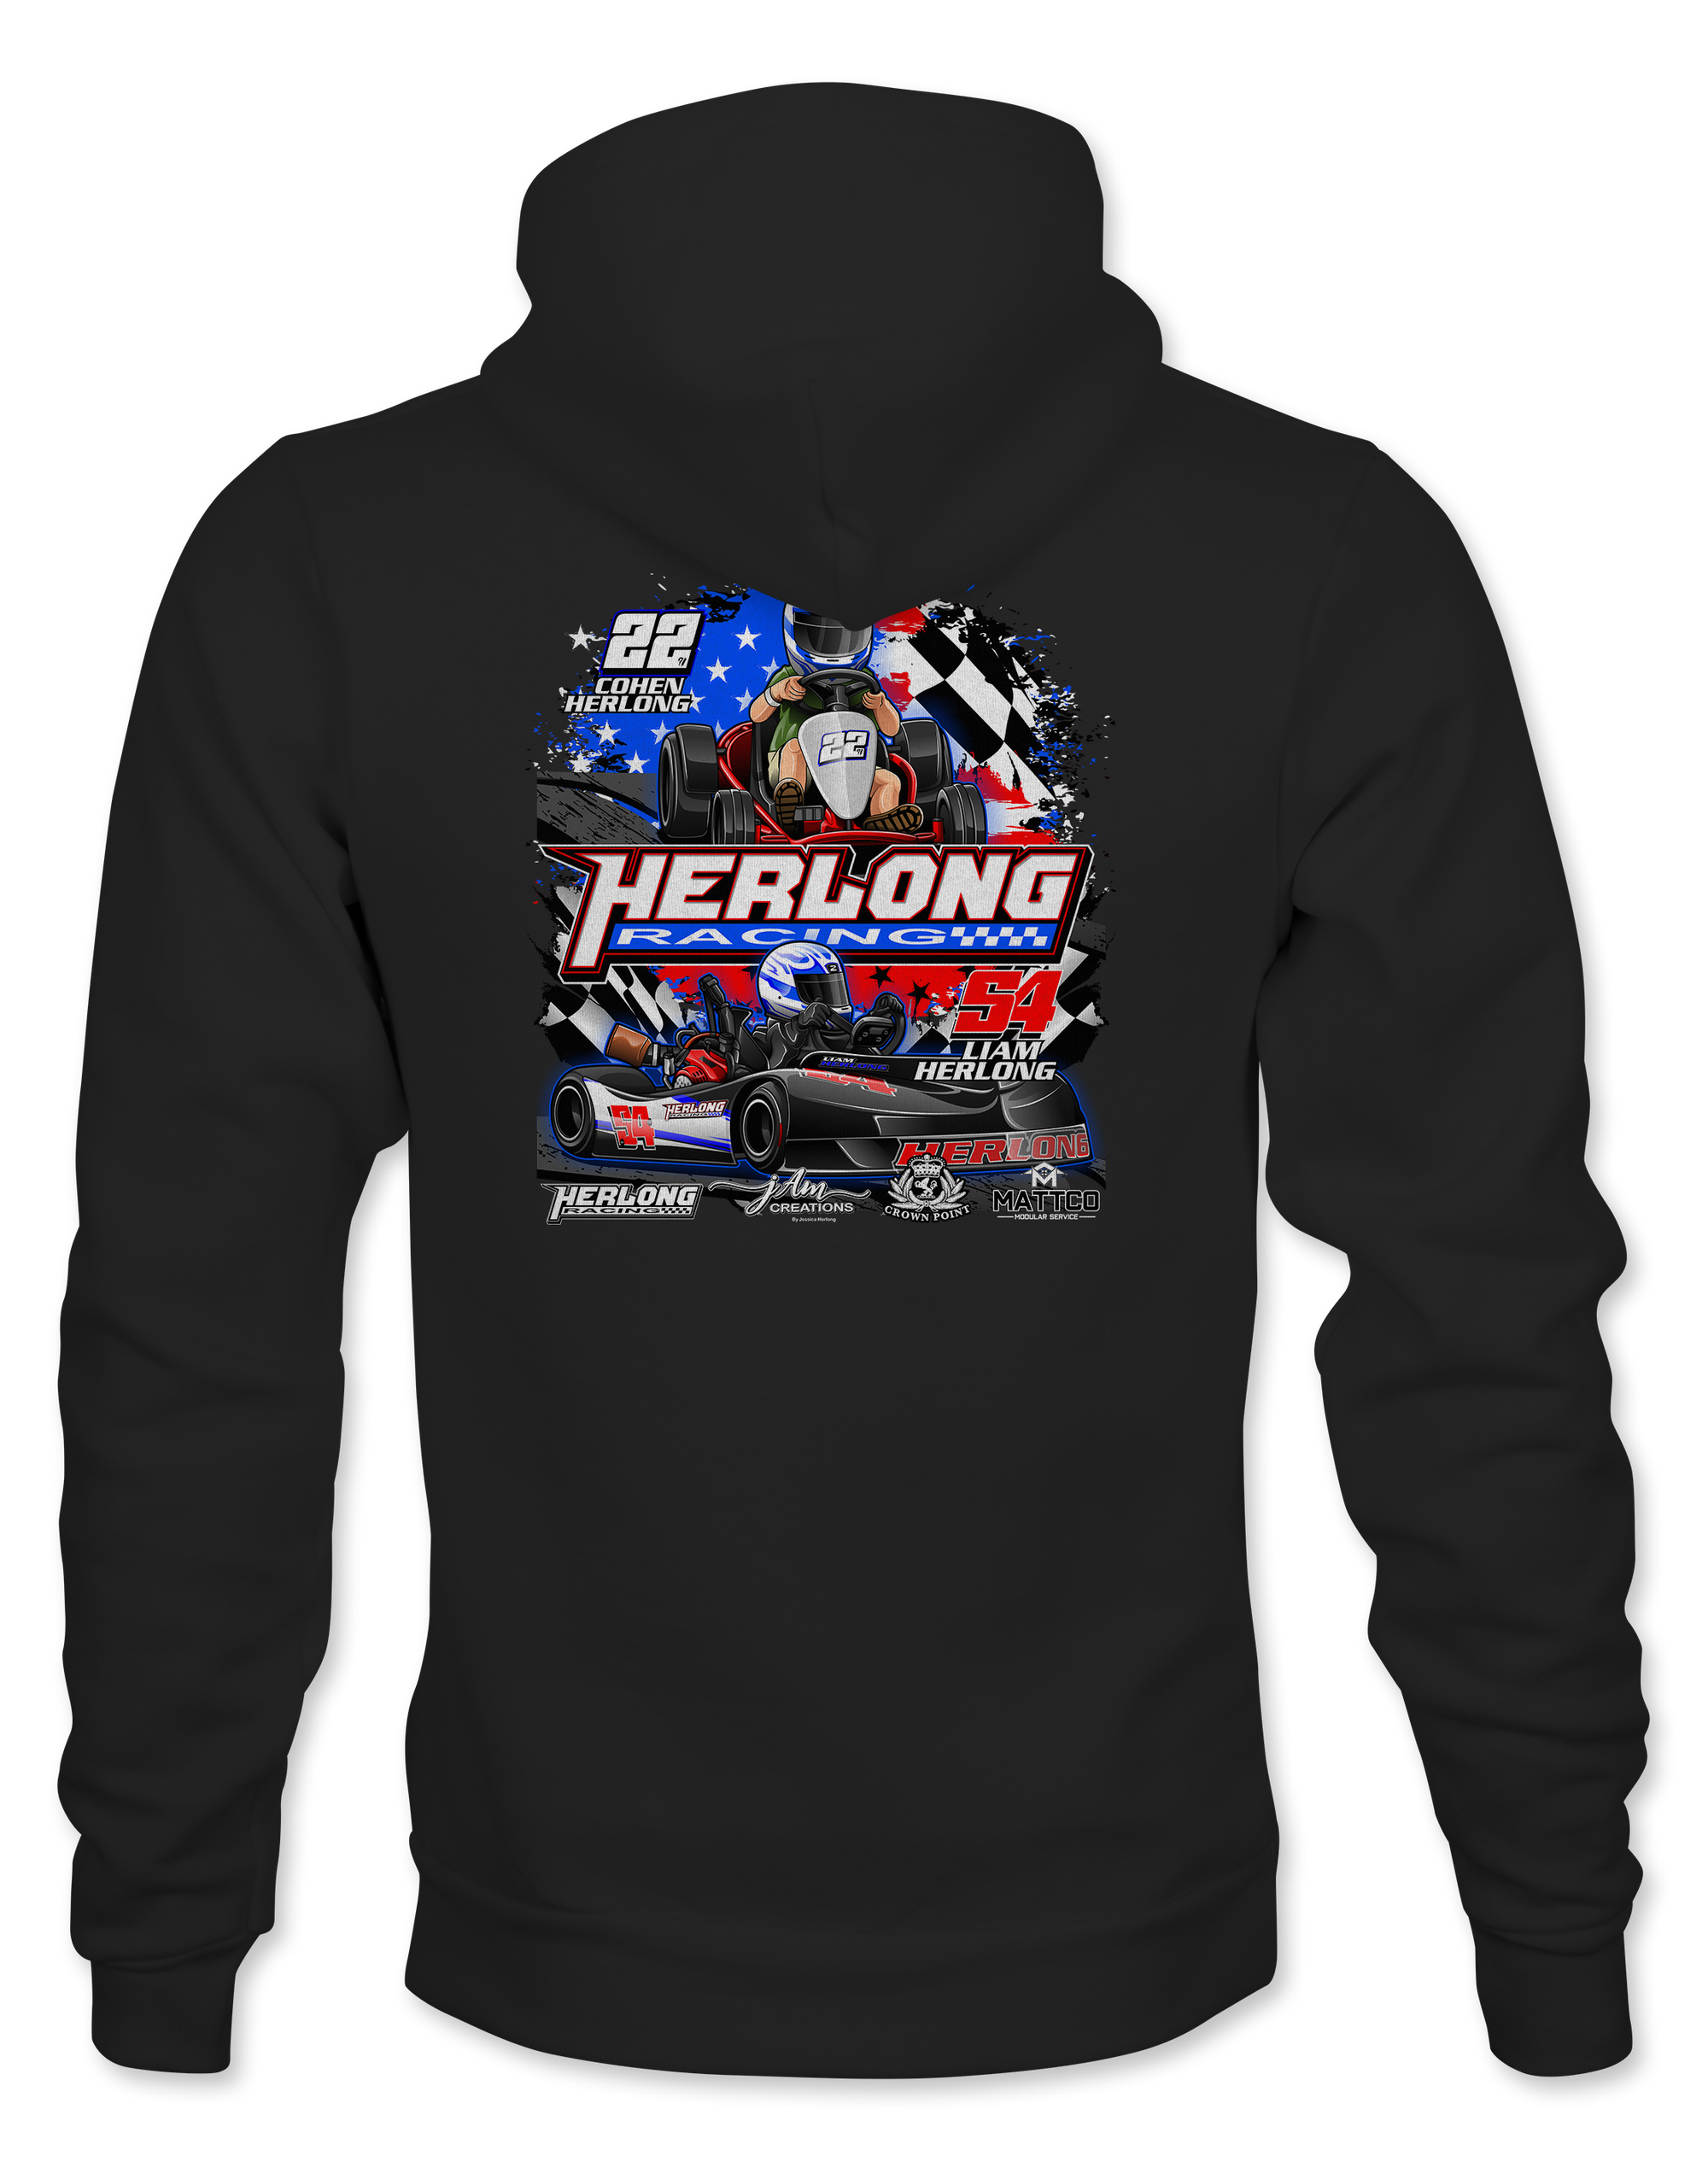 Herlong Racing Hoodies